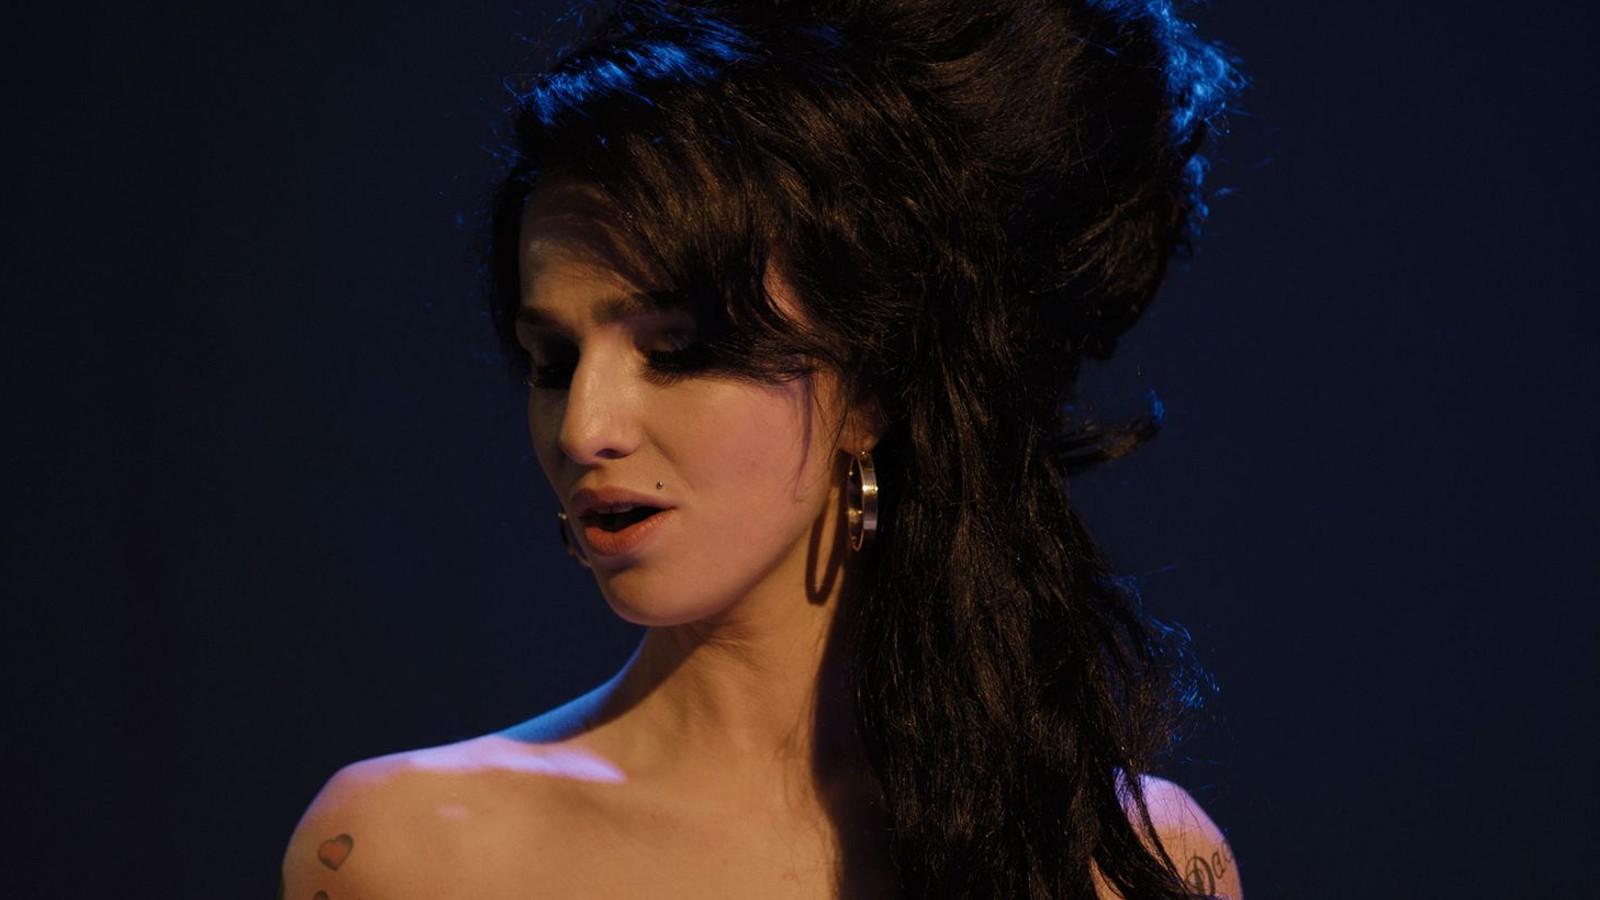 Marisa Abela singing as Amy Winehouse in Back to Black.